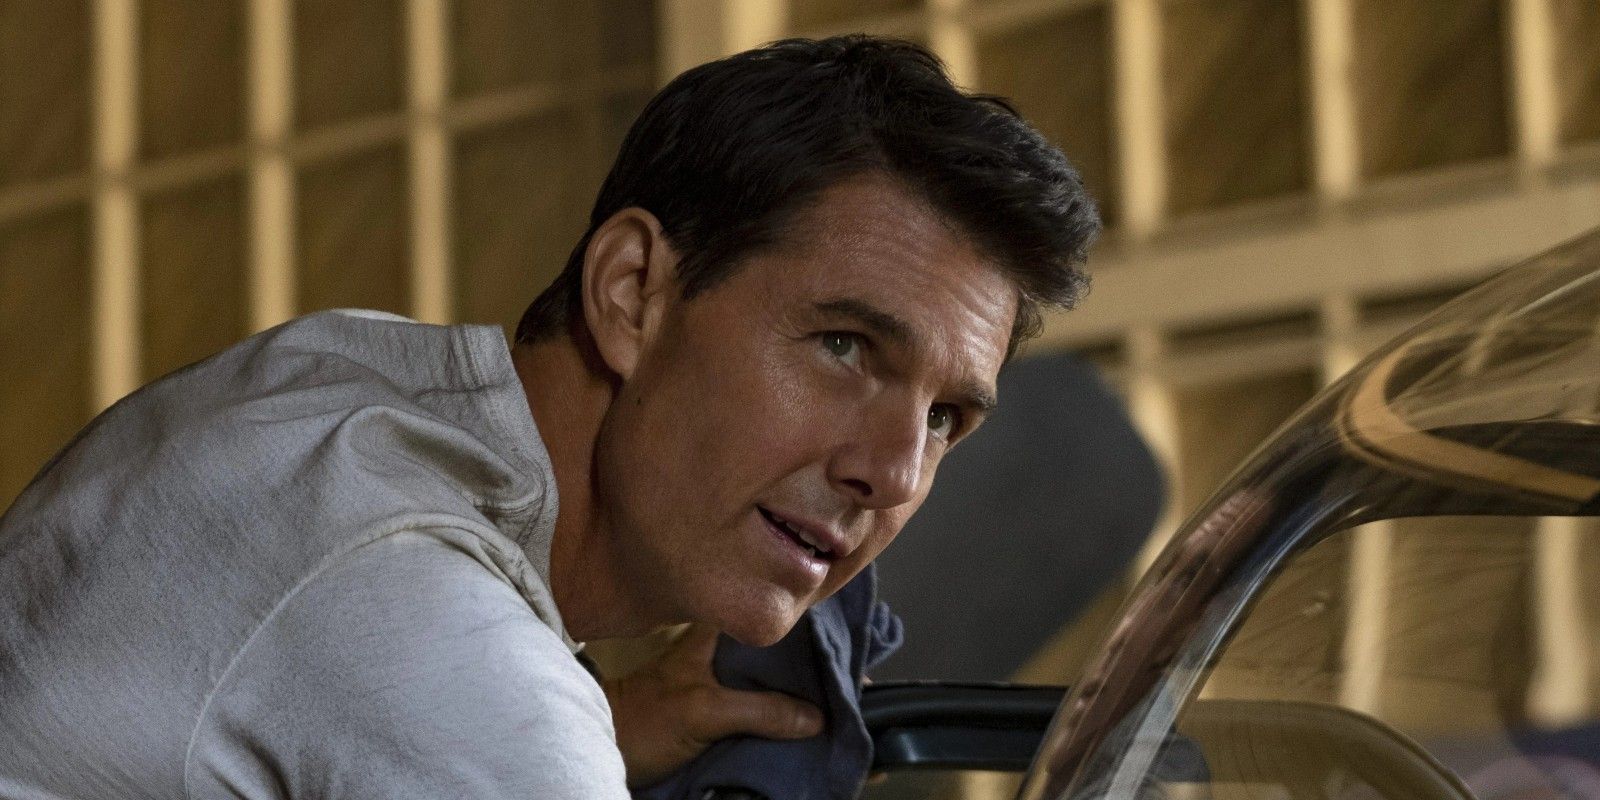 Pete "Maverick" Mitchell, played by Tom Cruise, in Top Gun: Maverick